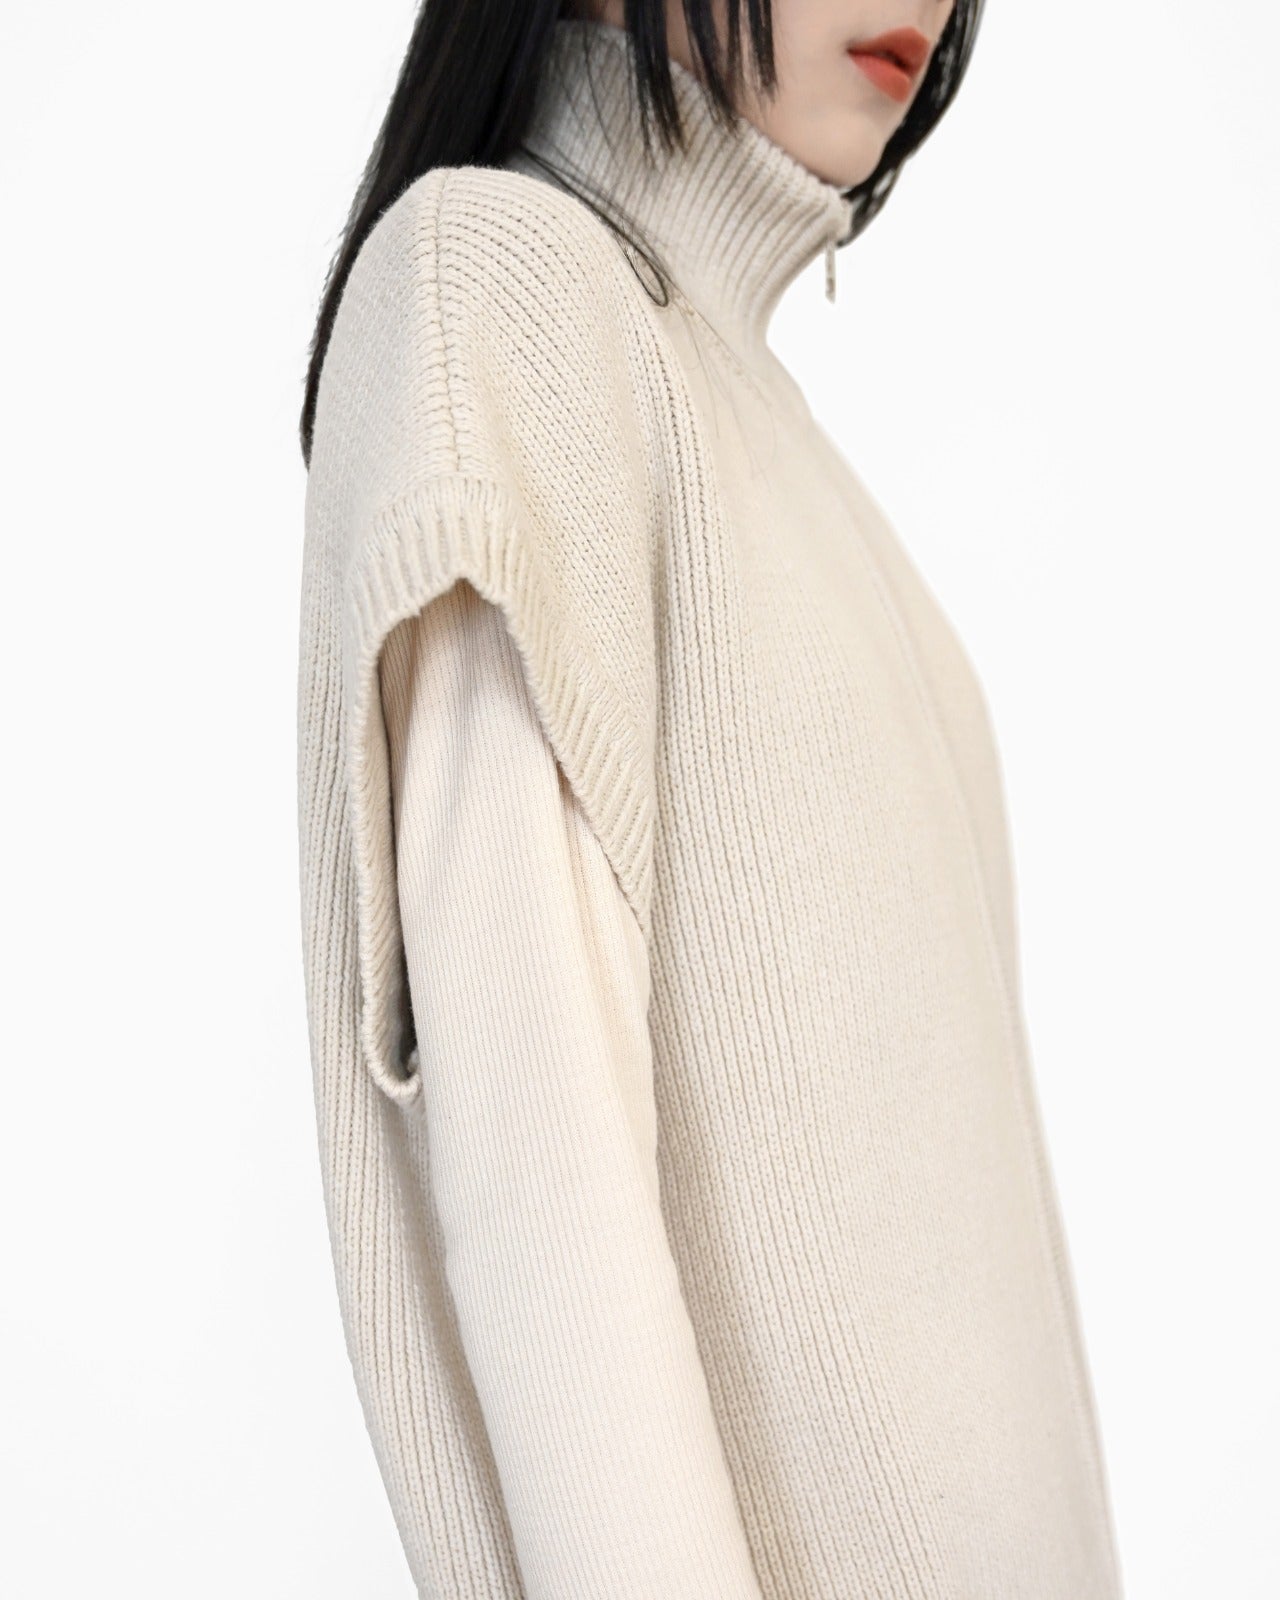 aalis JUSTINE high collar knitted zip up vest jacket (Beige)